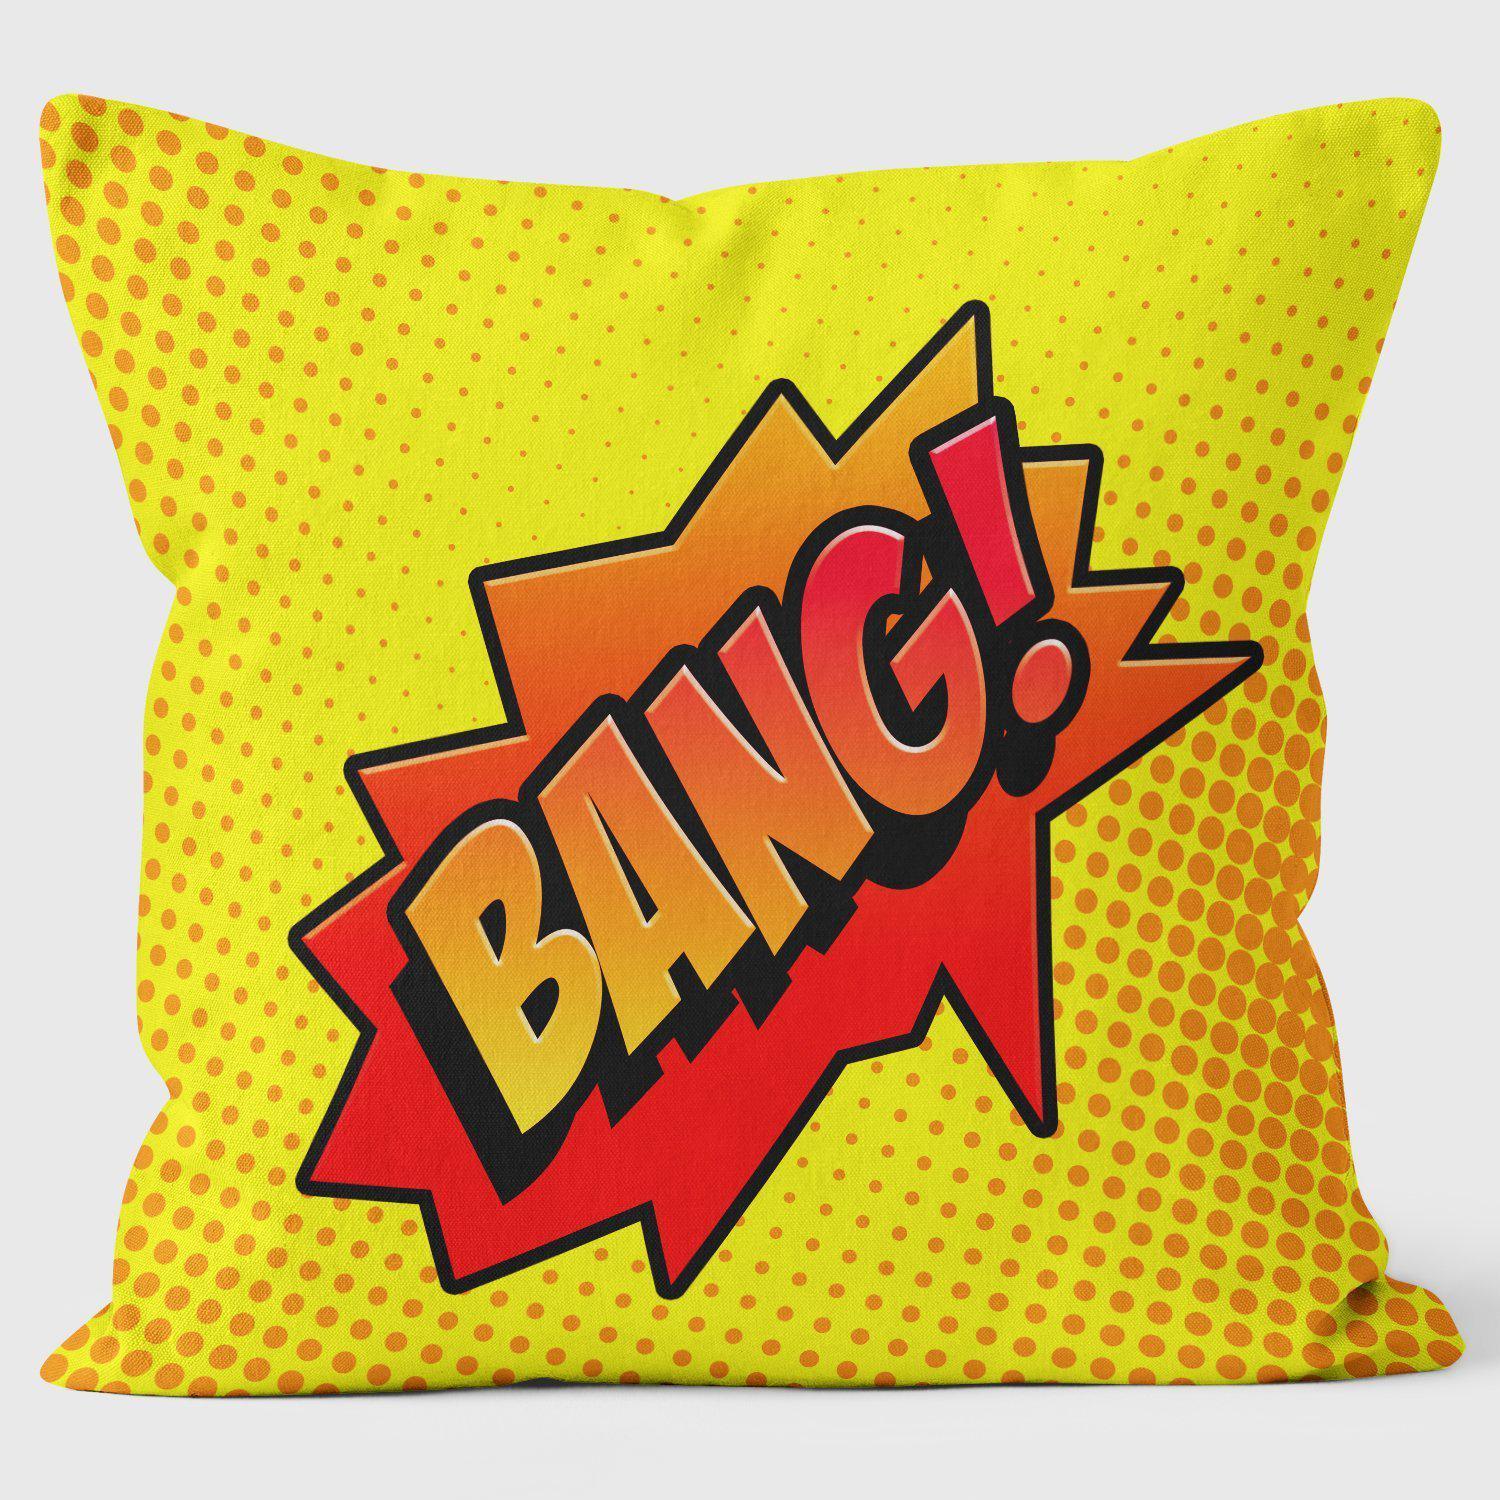 Bang! - Art Print Cushion - Handmade Cushions UK - WeLoveCushions